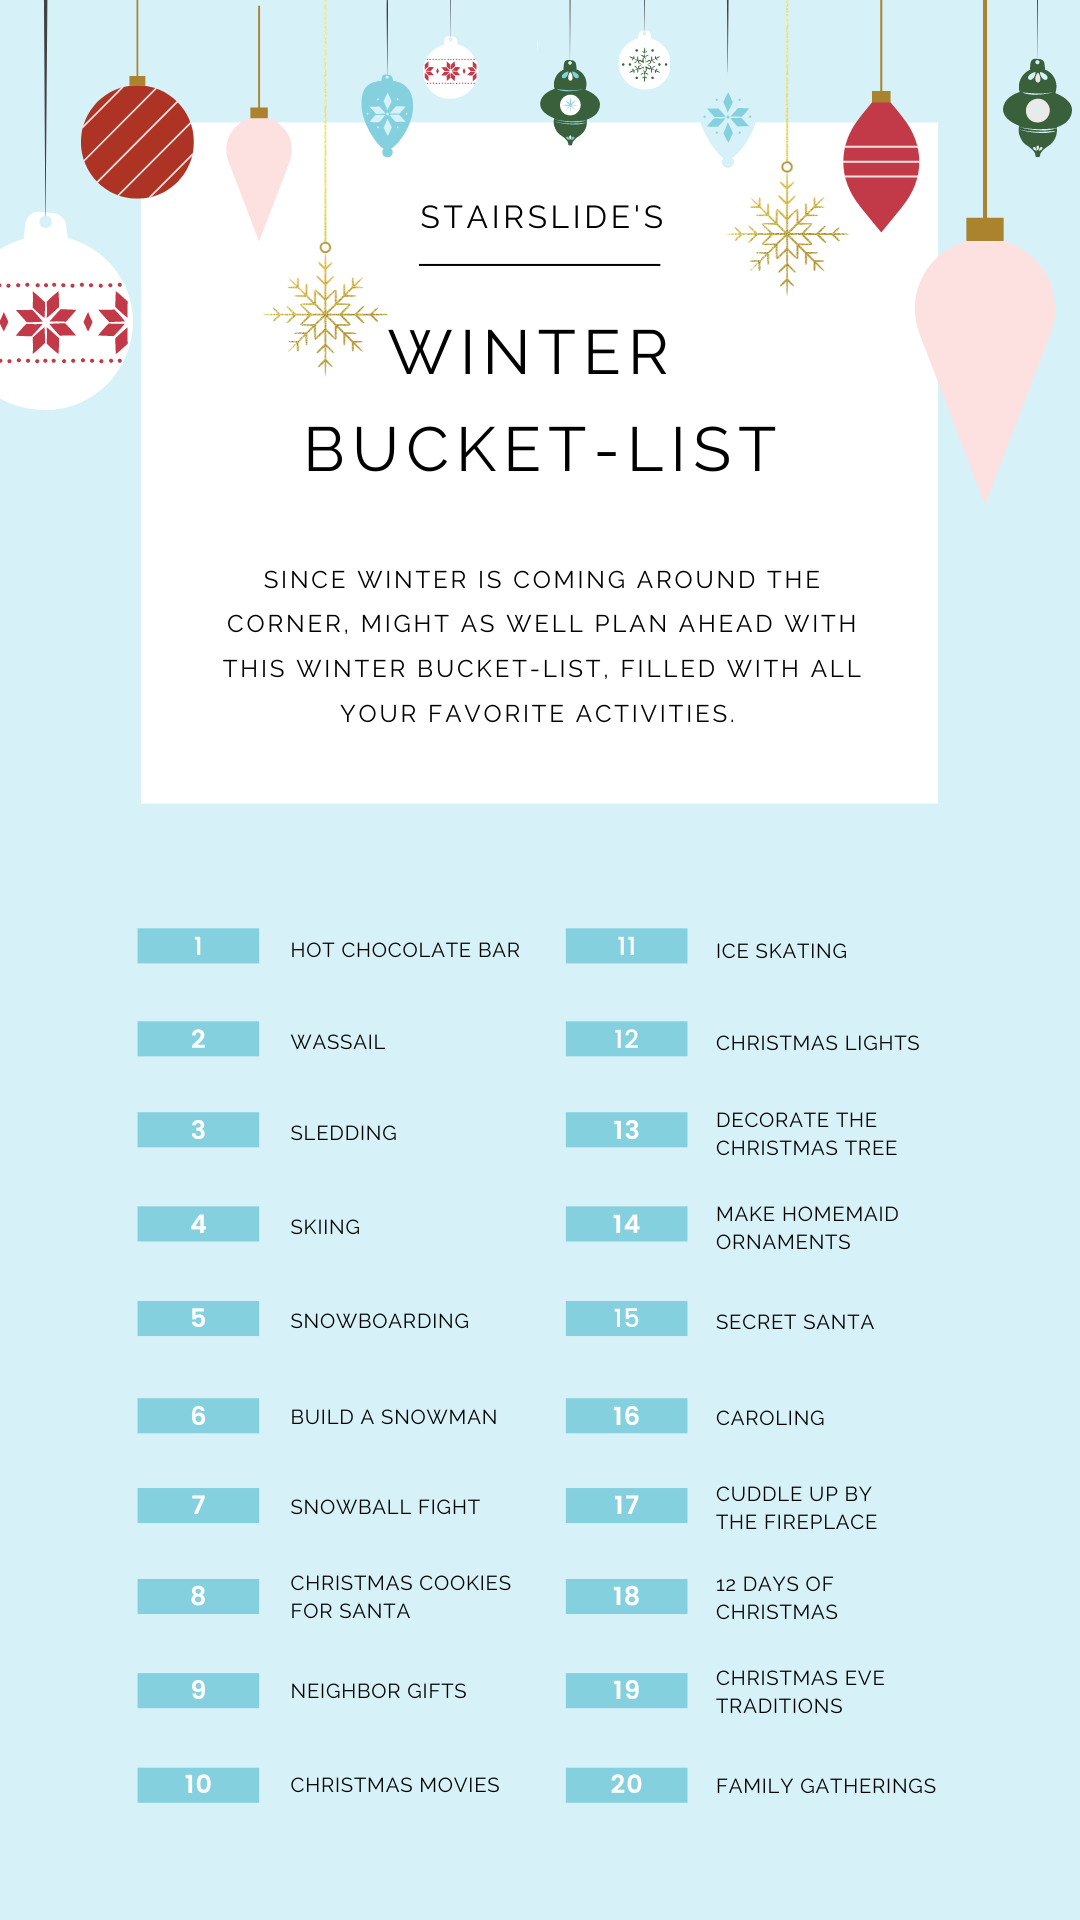 Winter Bucket-List